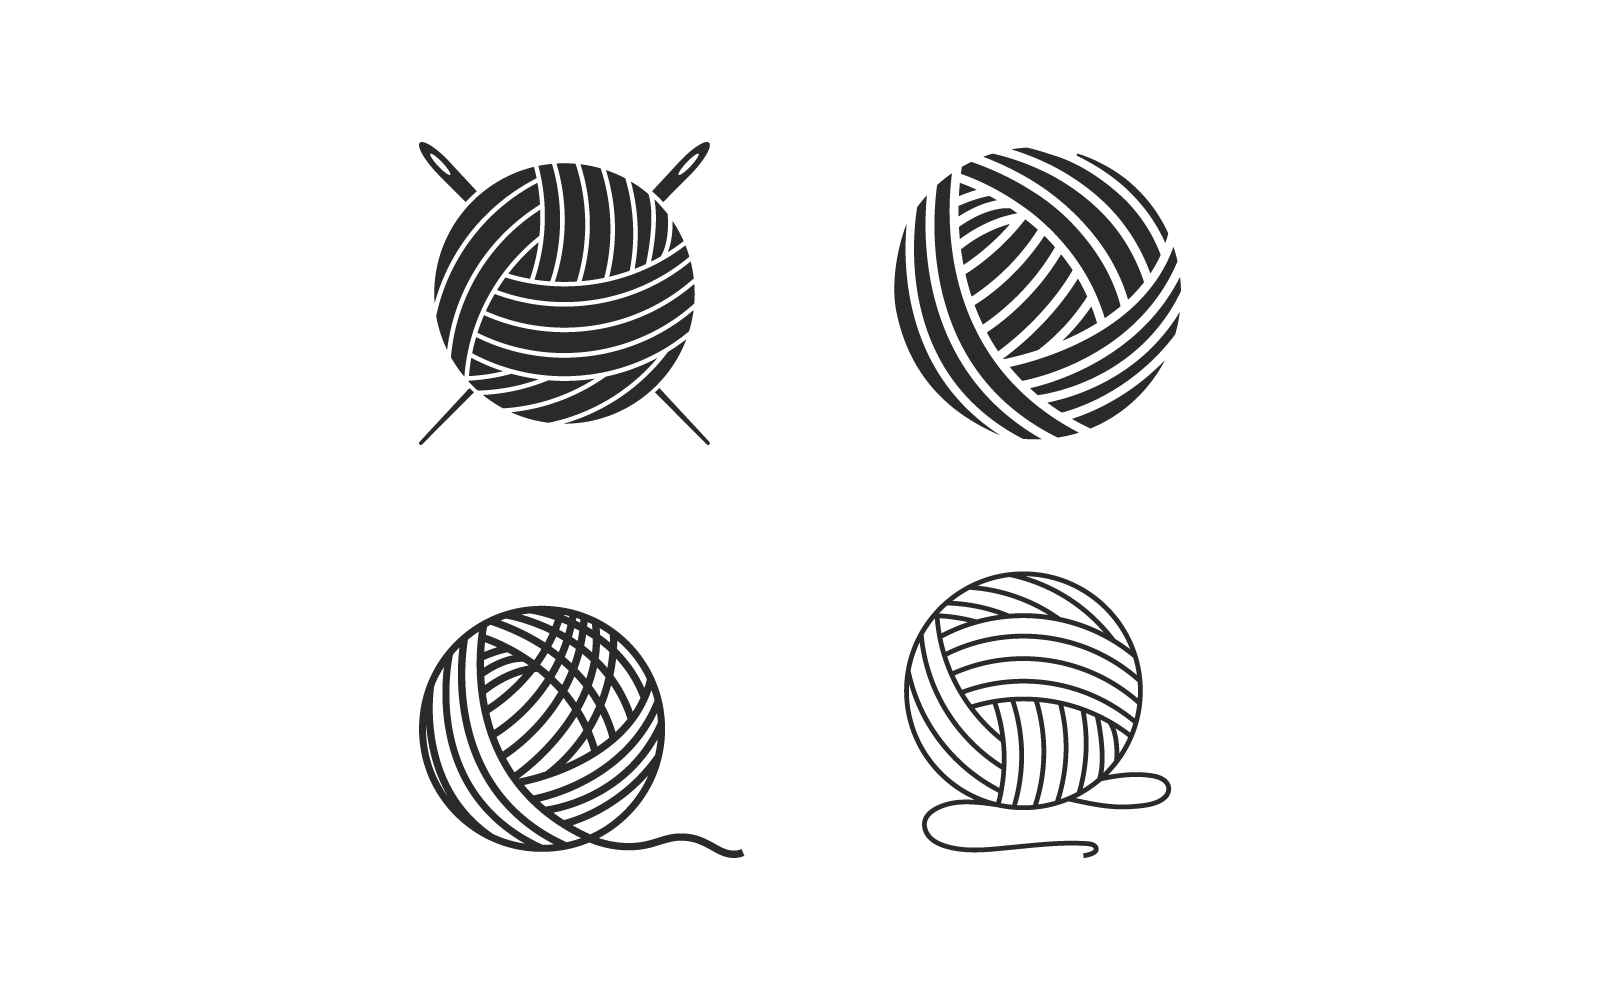 Yarn ball illustration design template